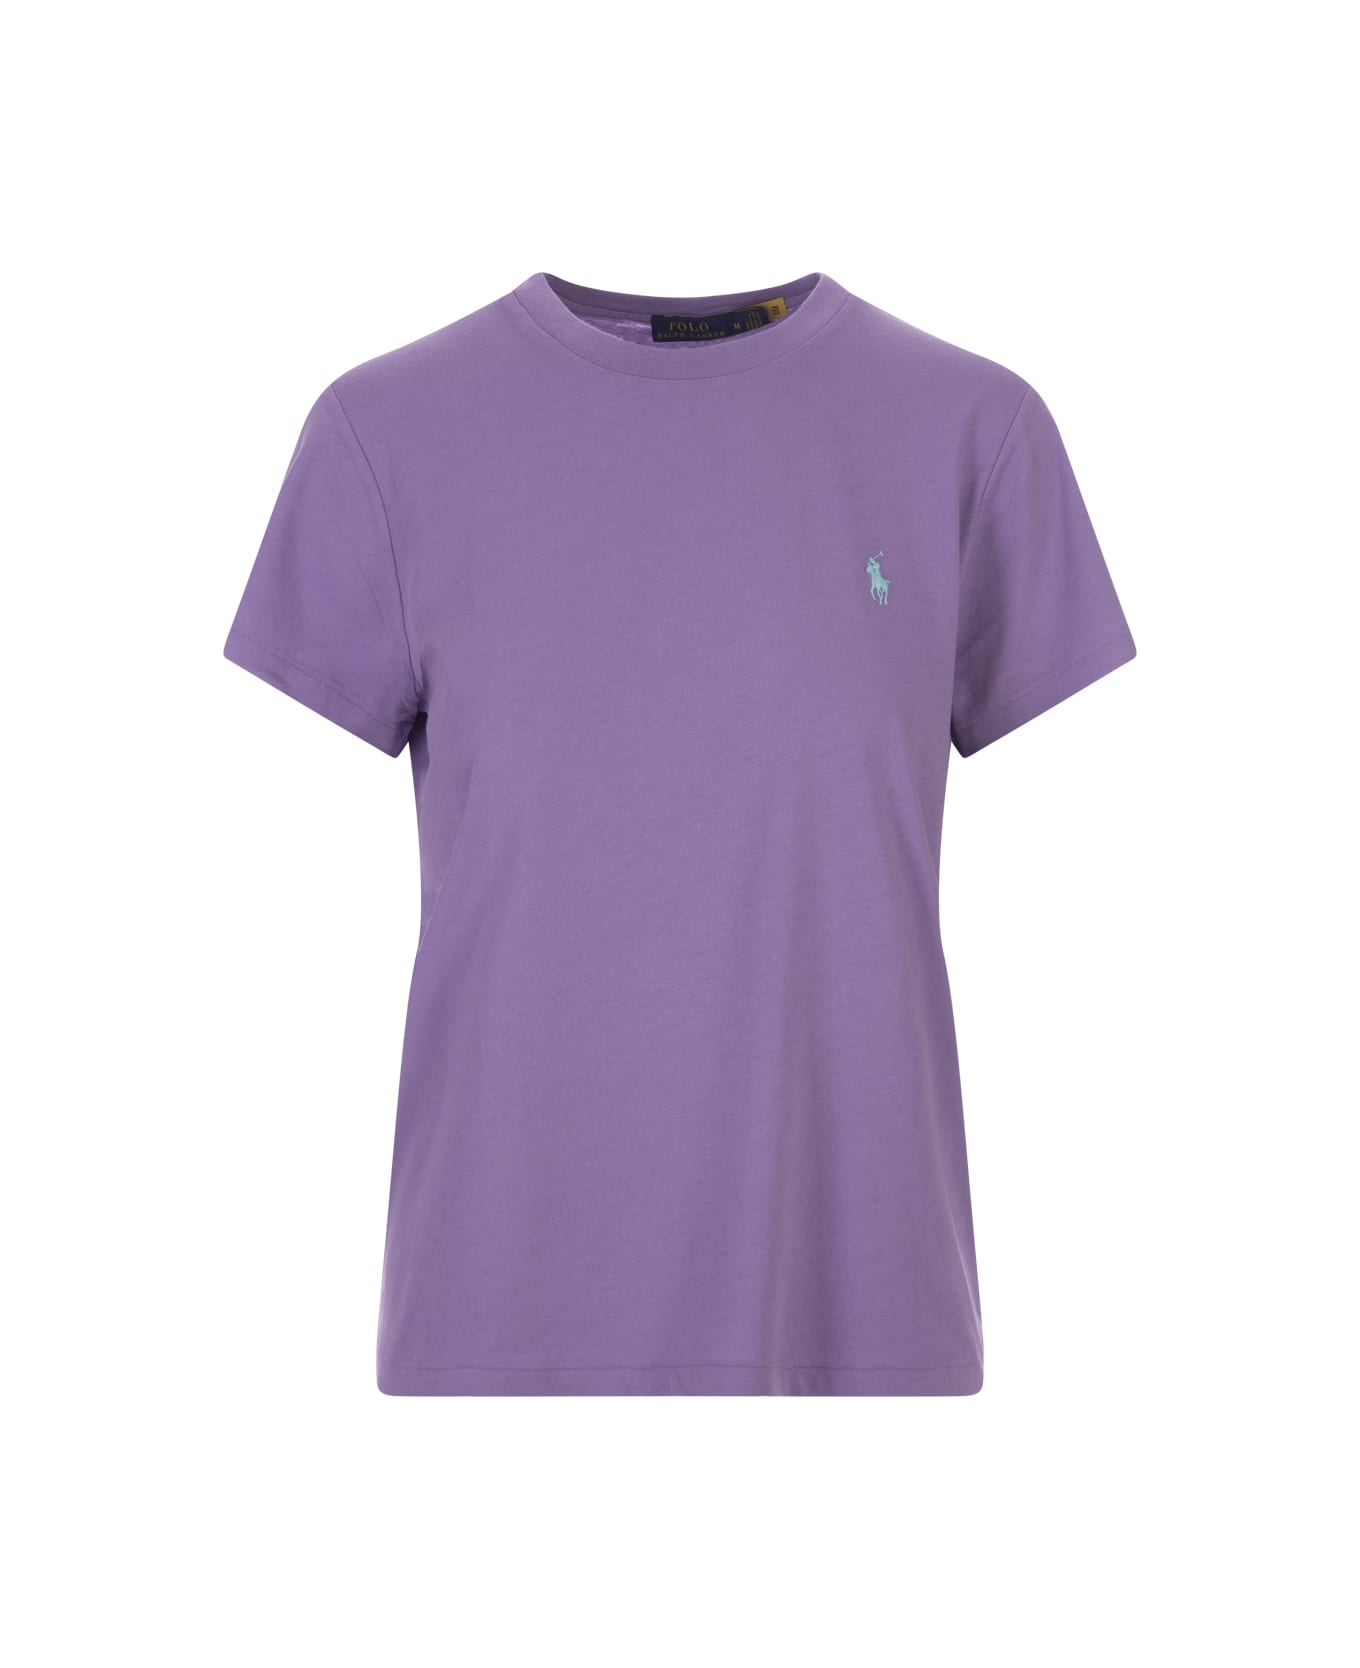 Ralph Lauren Purple T-shirt With Contrasting Pony - Wisteria Tシャツ